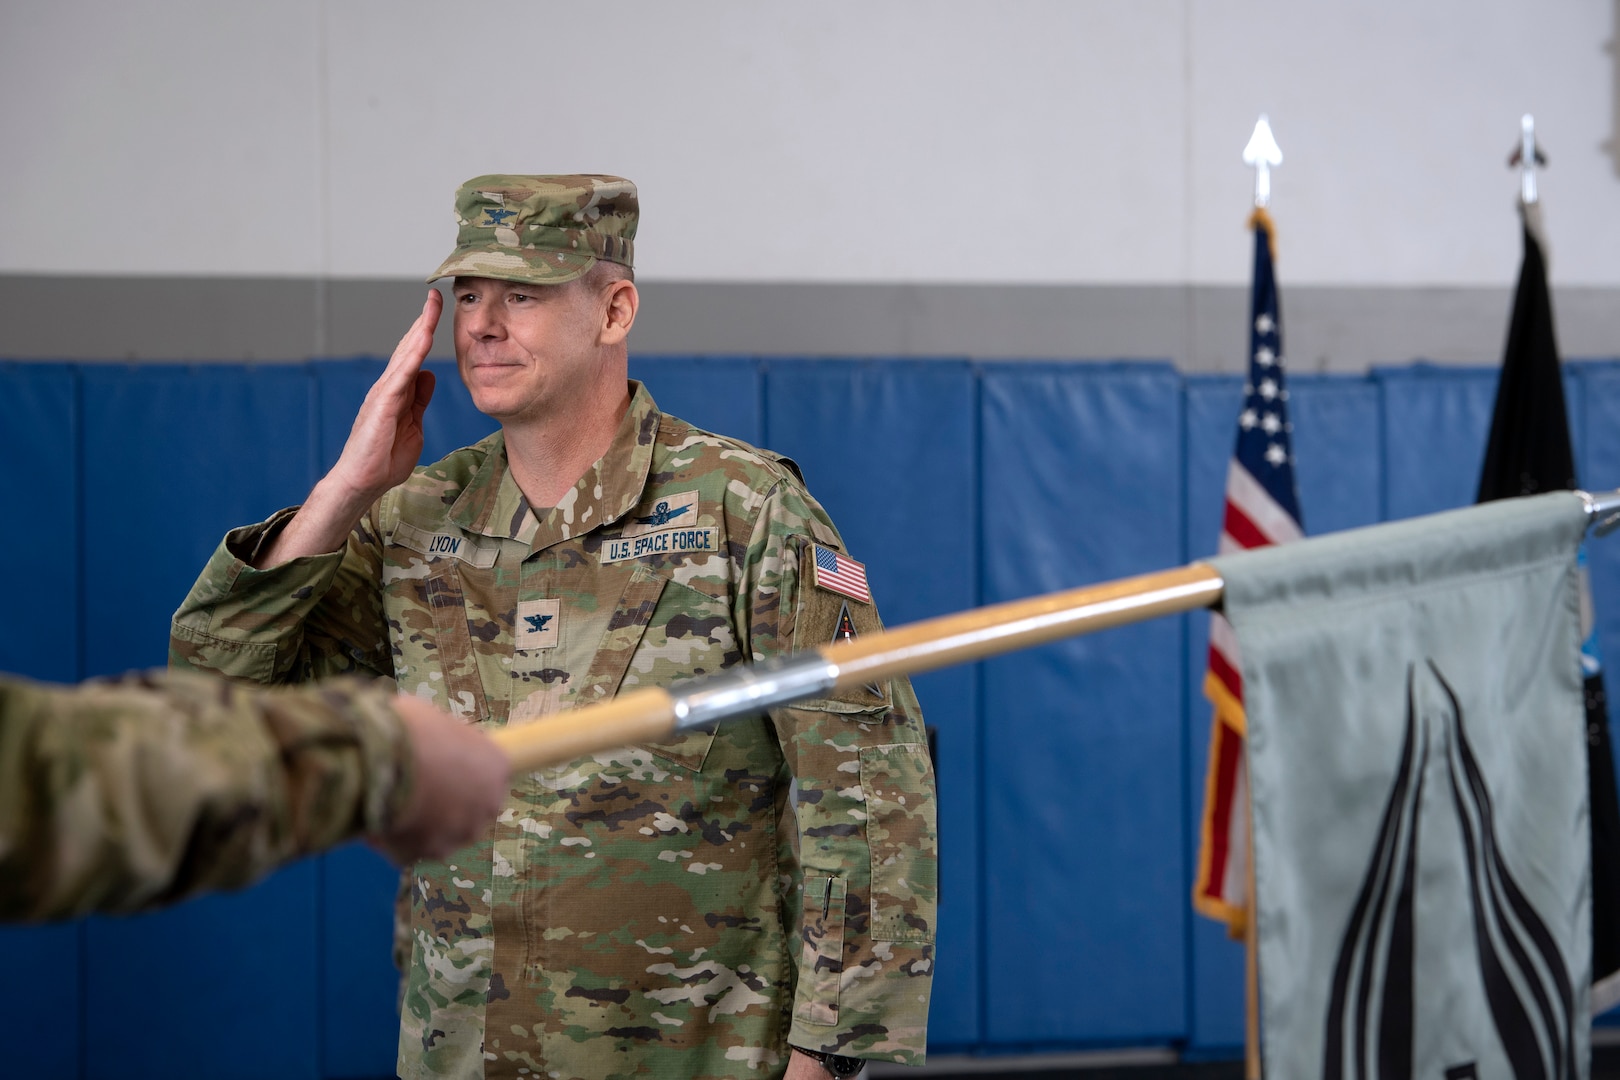 Man in uniform saluting